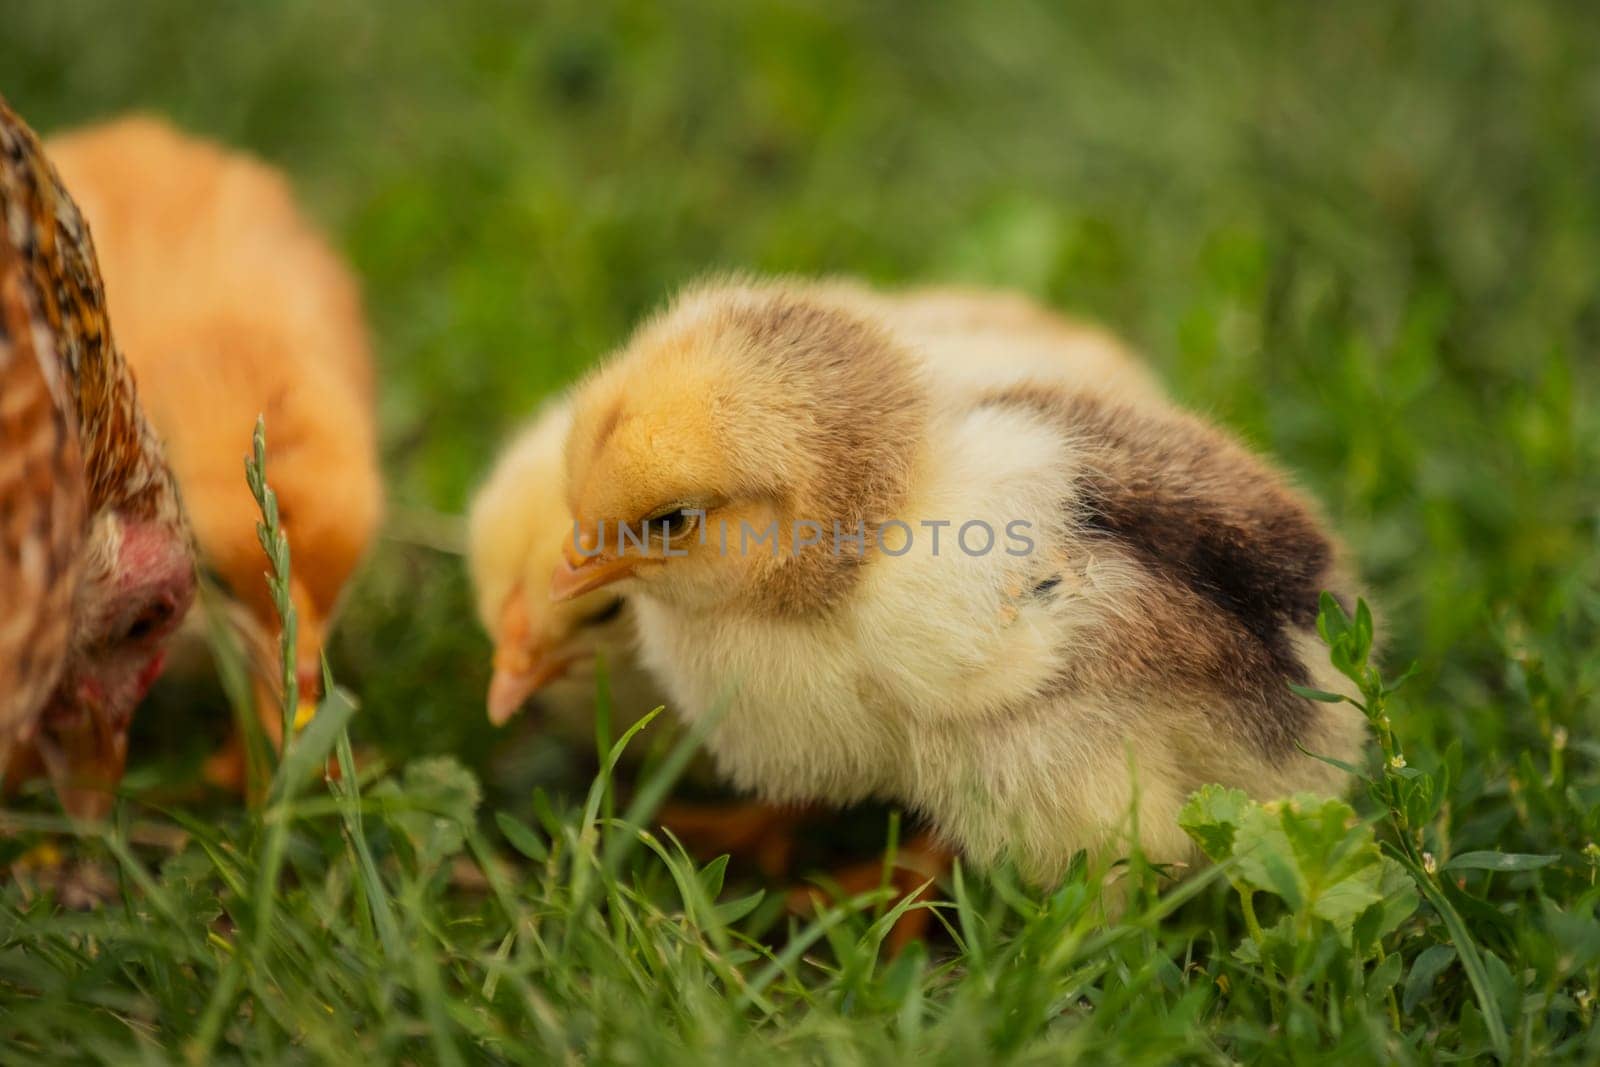 little chickens stand near their mother chicken by zokov